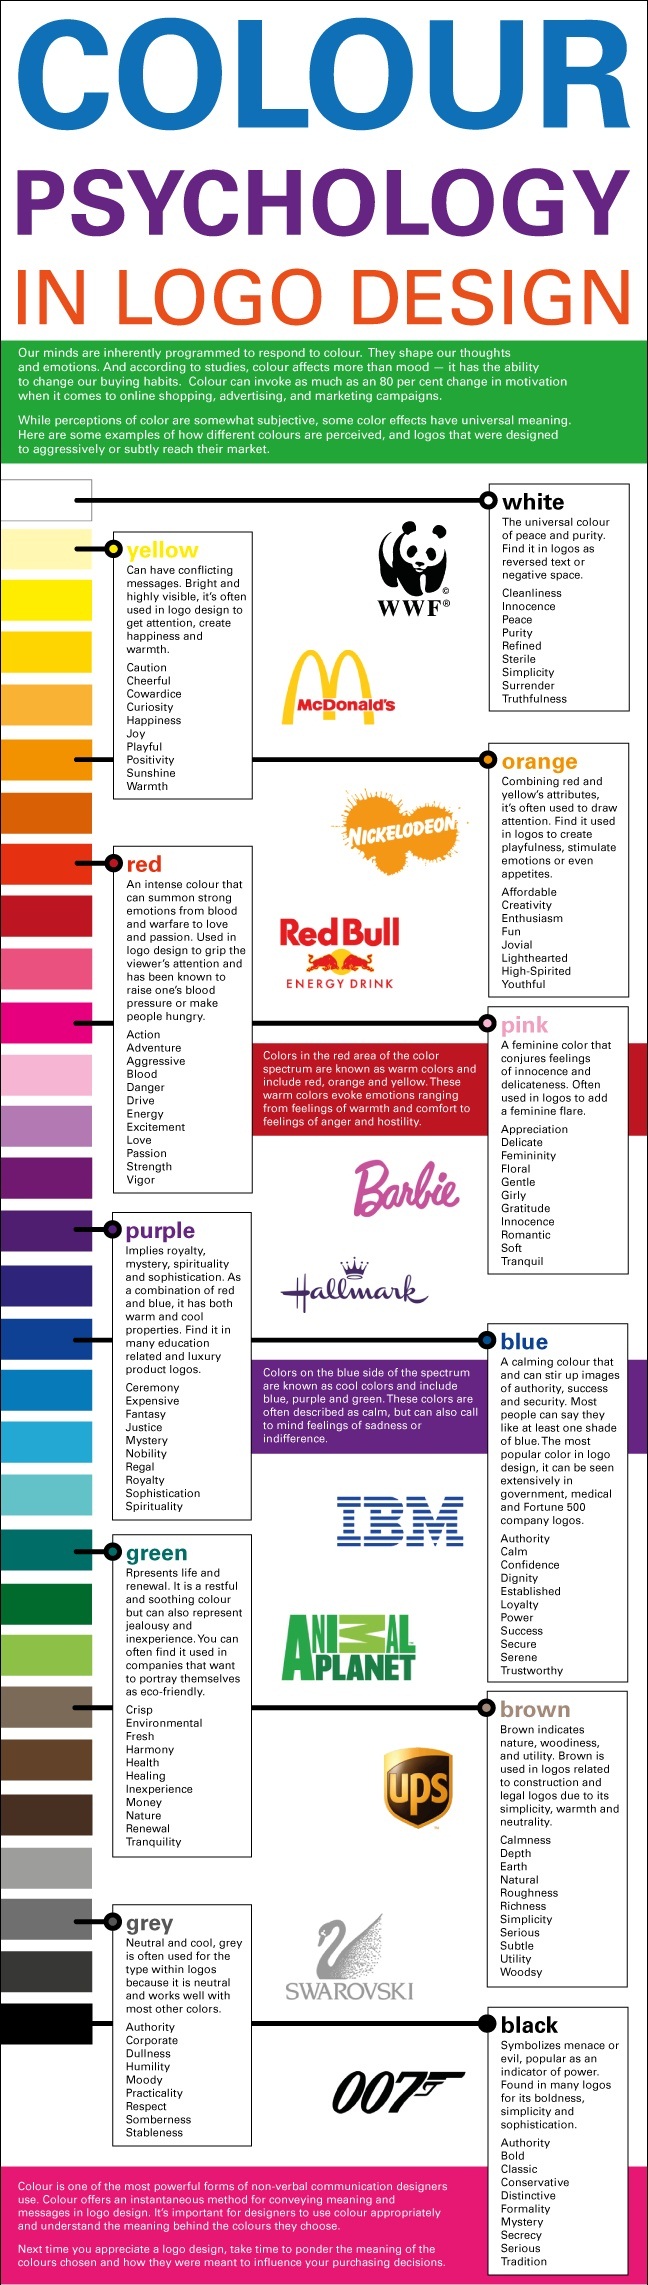 Color Psychology for Designing your Brand